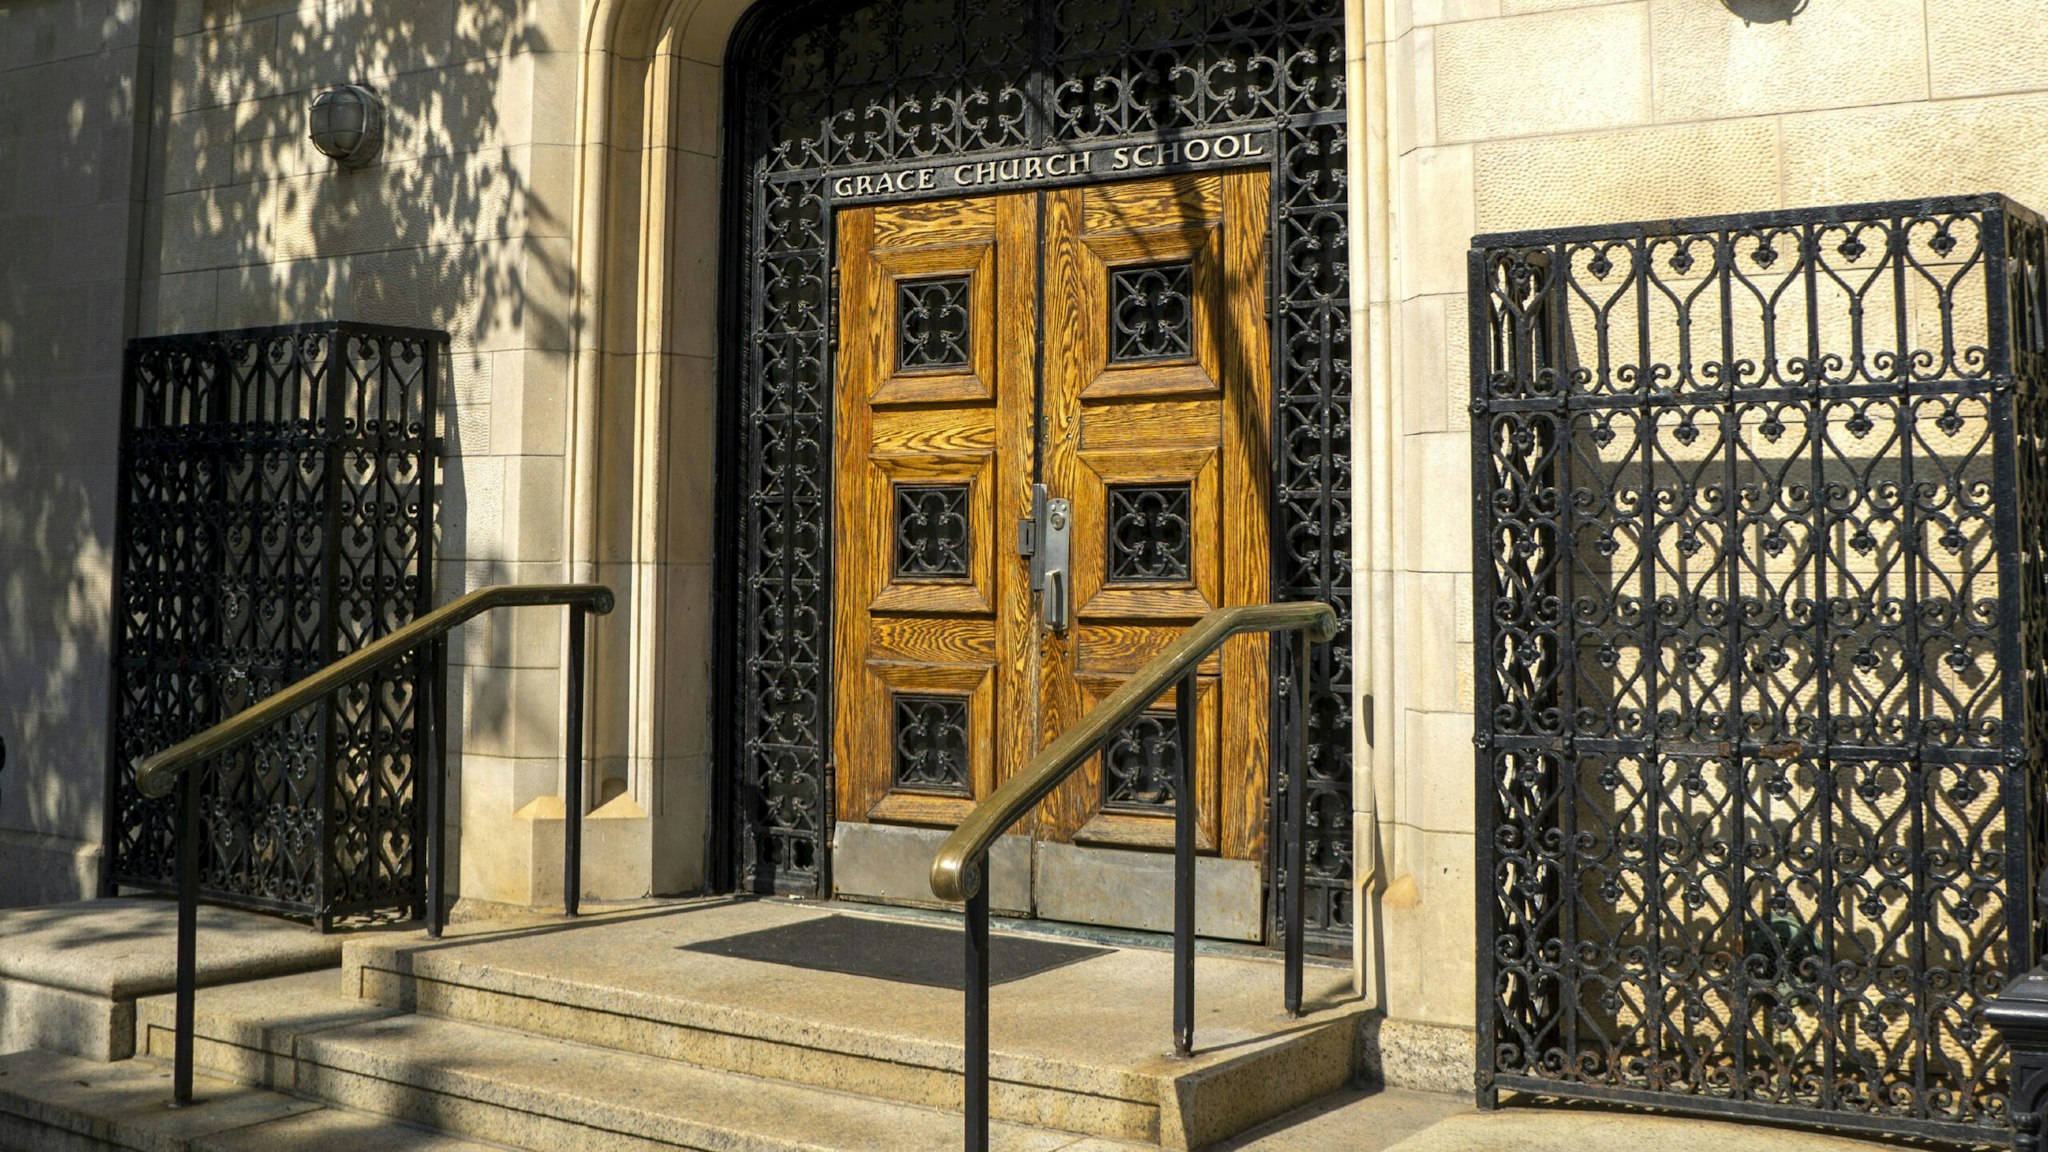 Grace Church School, Entrance, 4th Avenue, New York City, New York, USA.